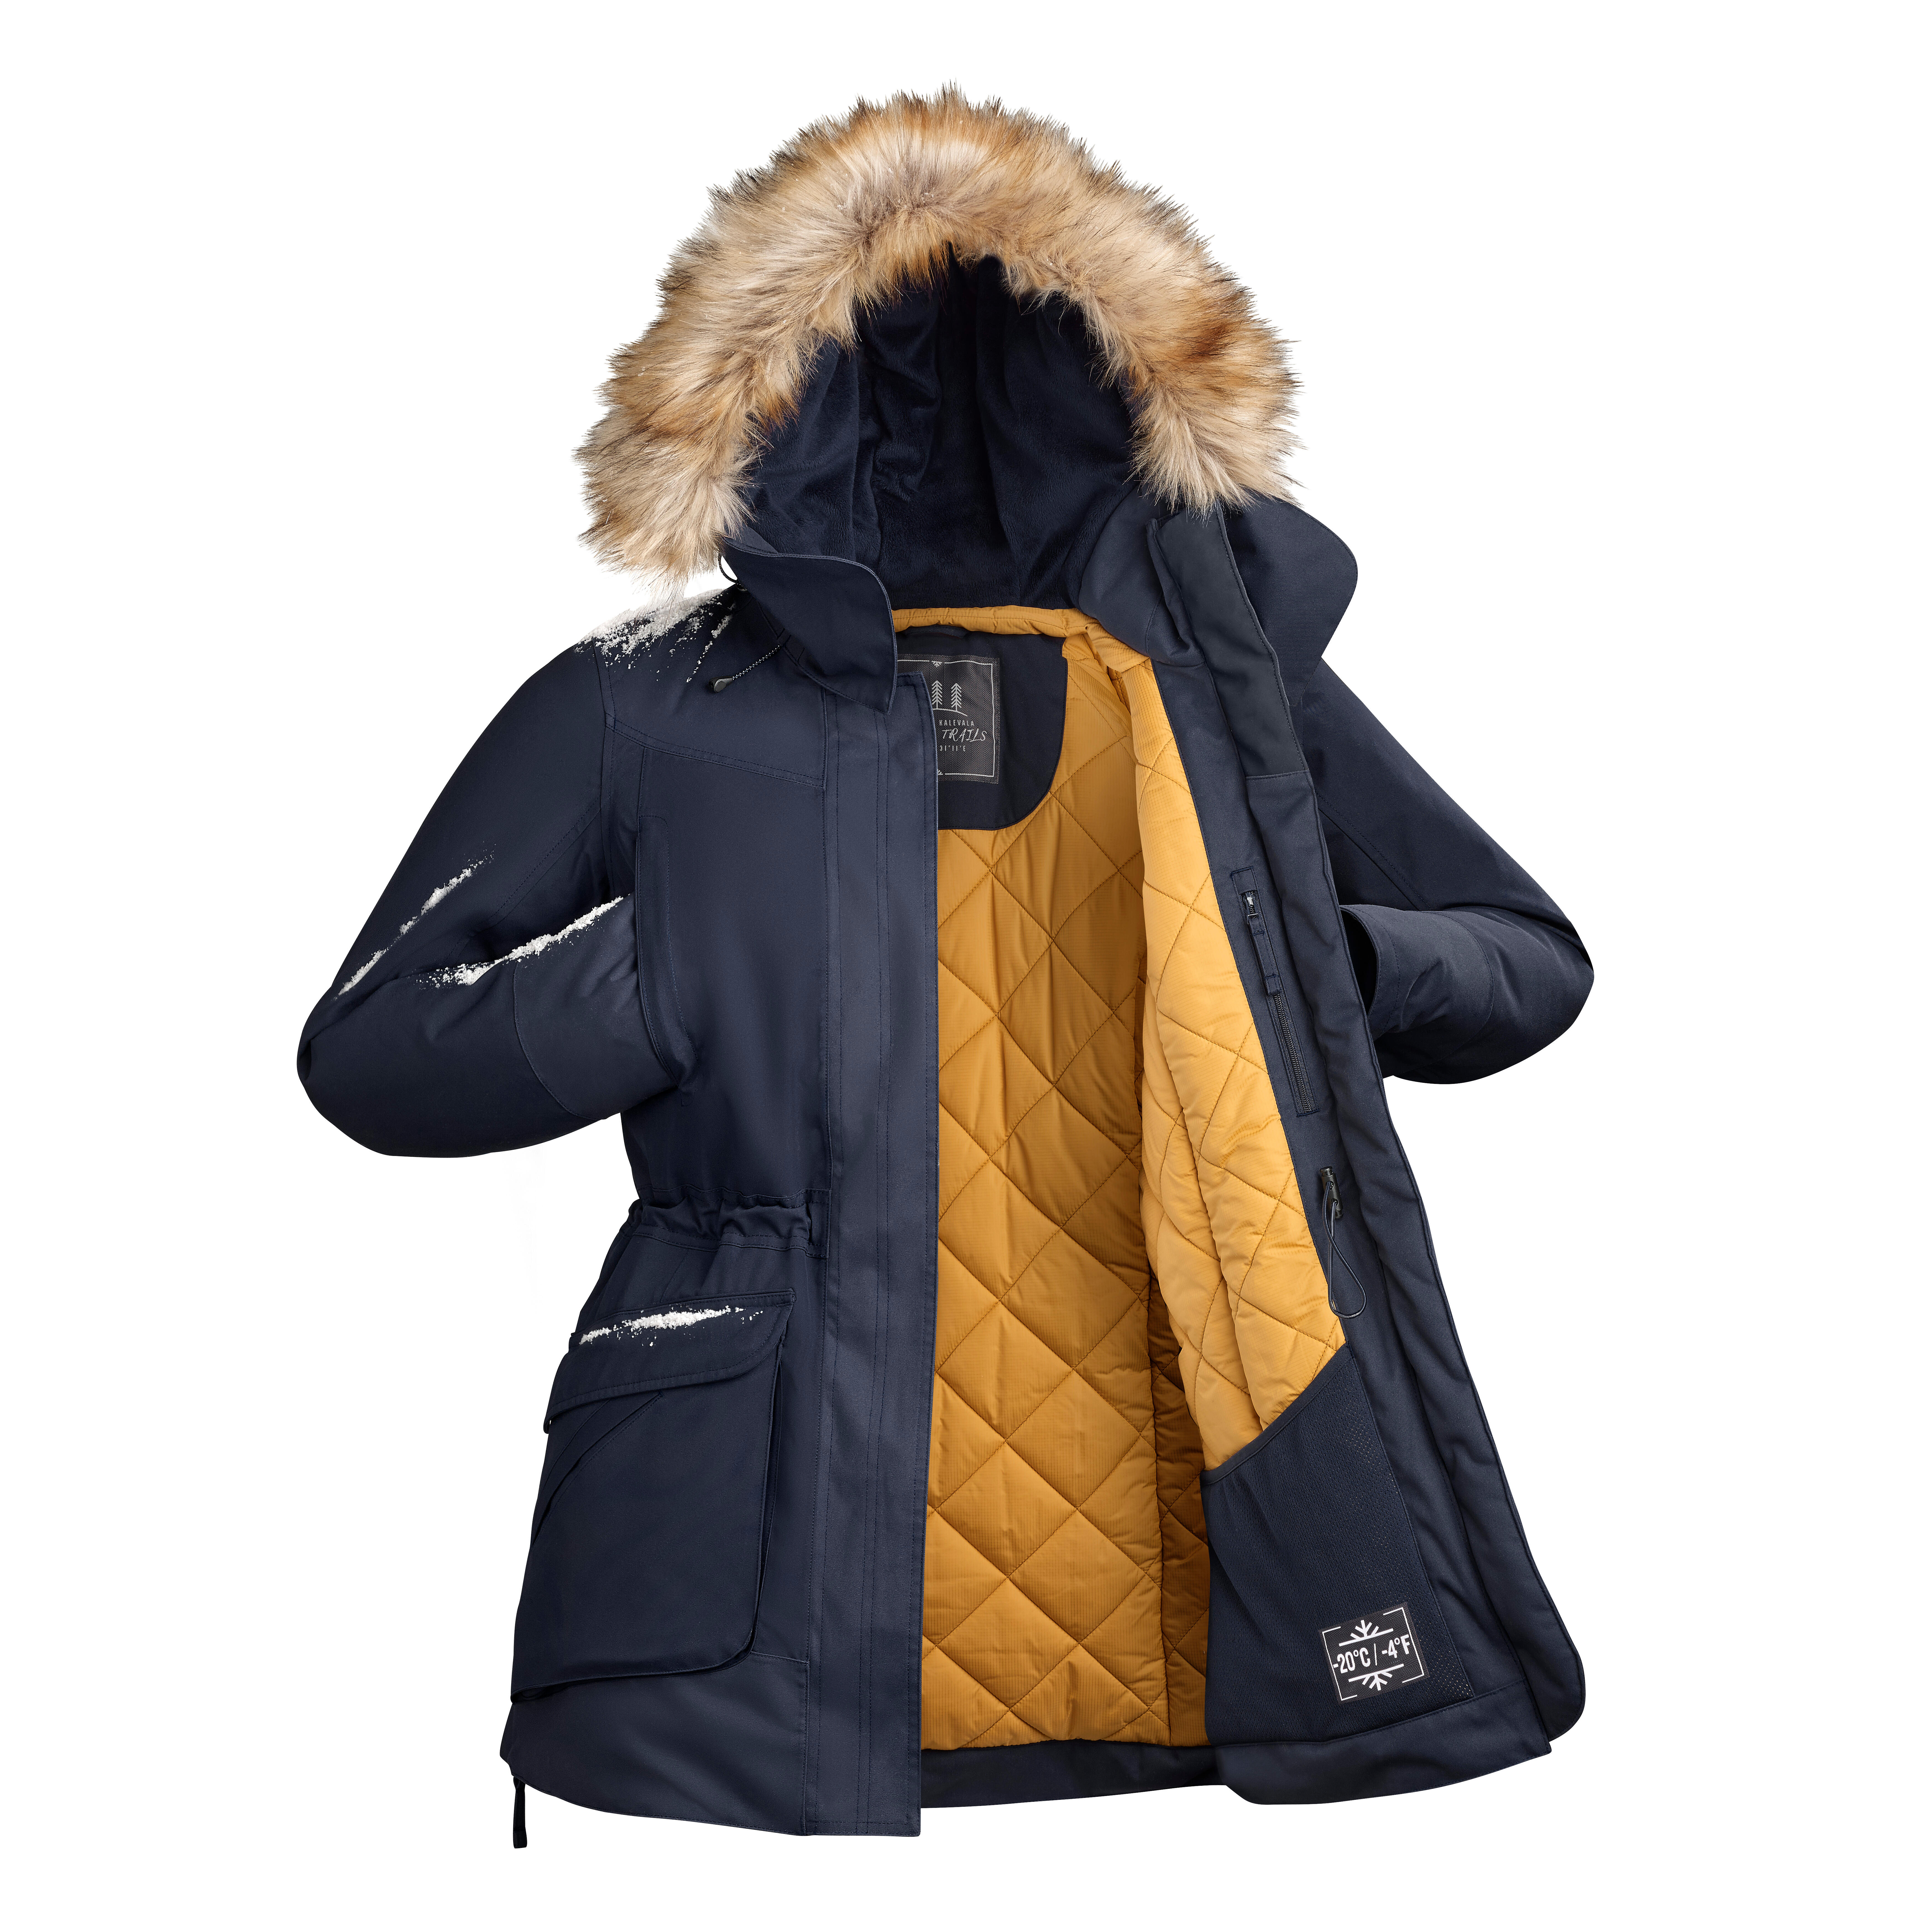 Women's Winter Jacket - SH 900 - Asphalt blue - Quechua - Decathlon